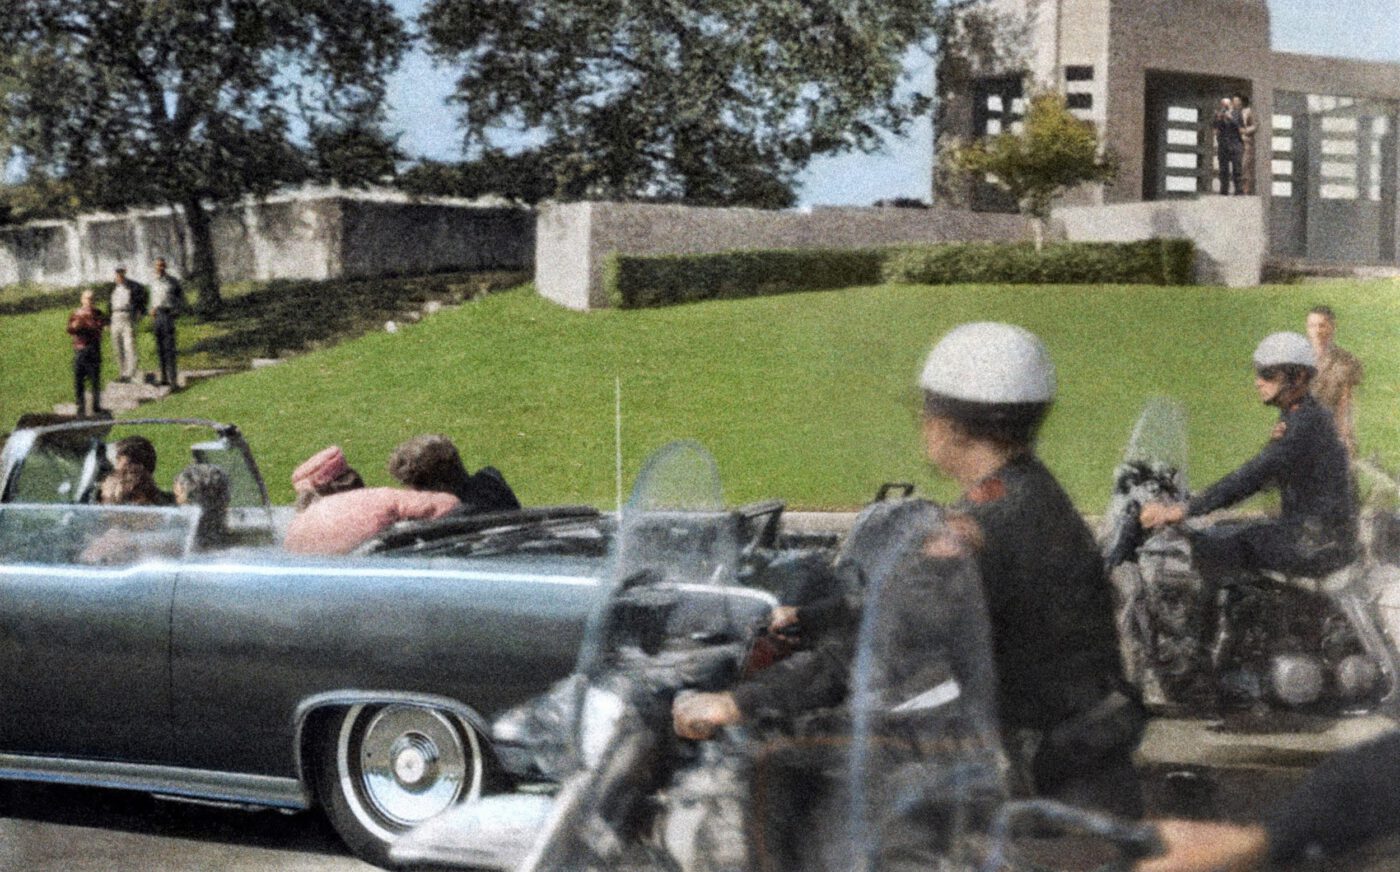 The assassination of JFK